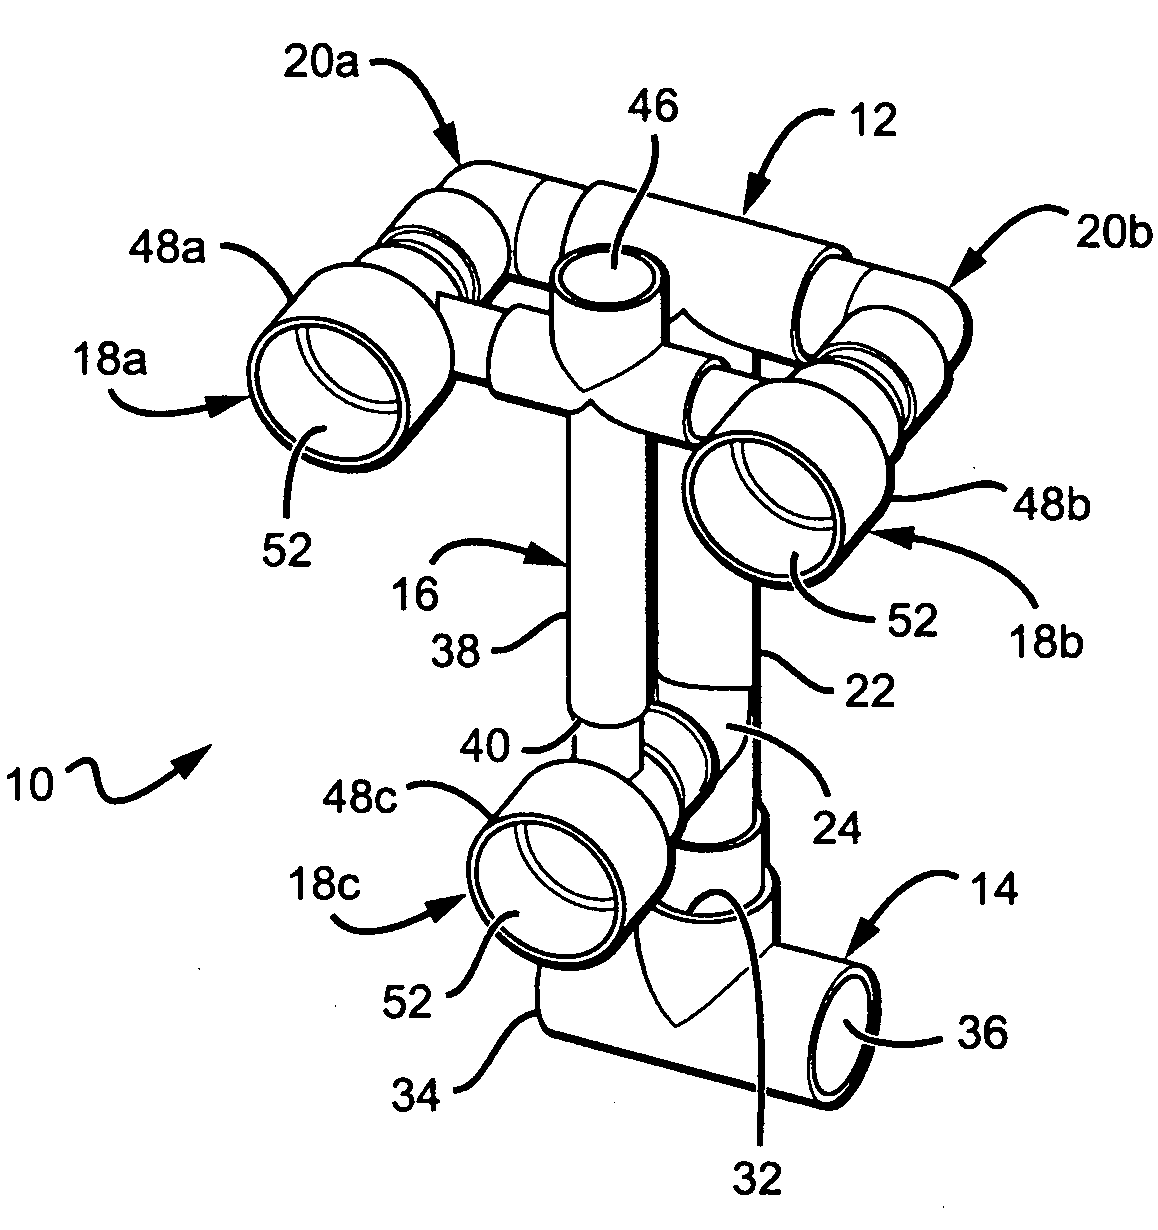 Multi-jet manifold